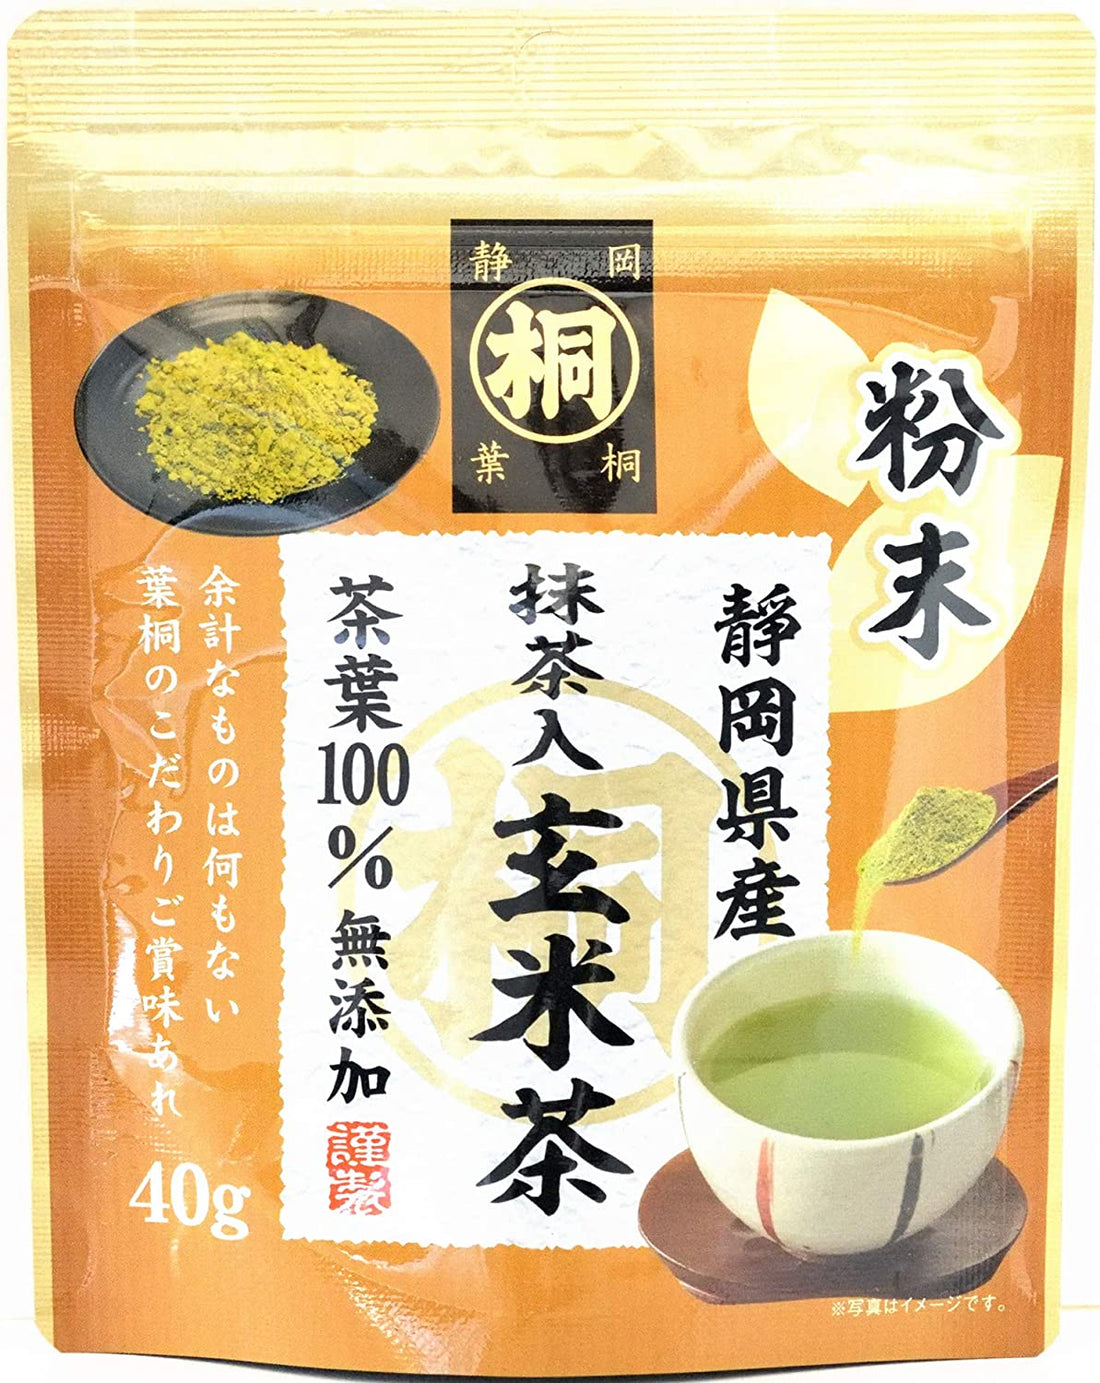 Hagiri Brown Rice Tea with Maru Paulownia Matcha from Shizuoka Prefecture (Powdered) 40g - NihonMura